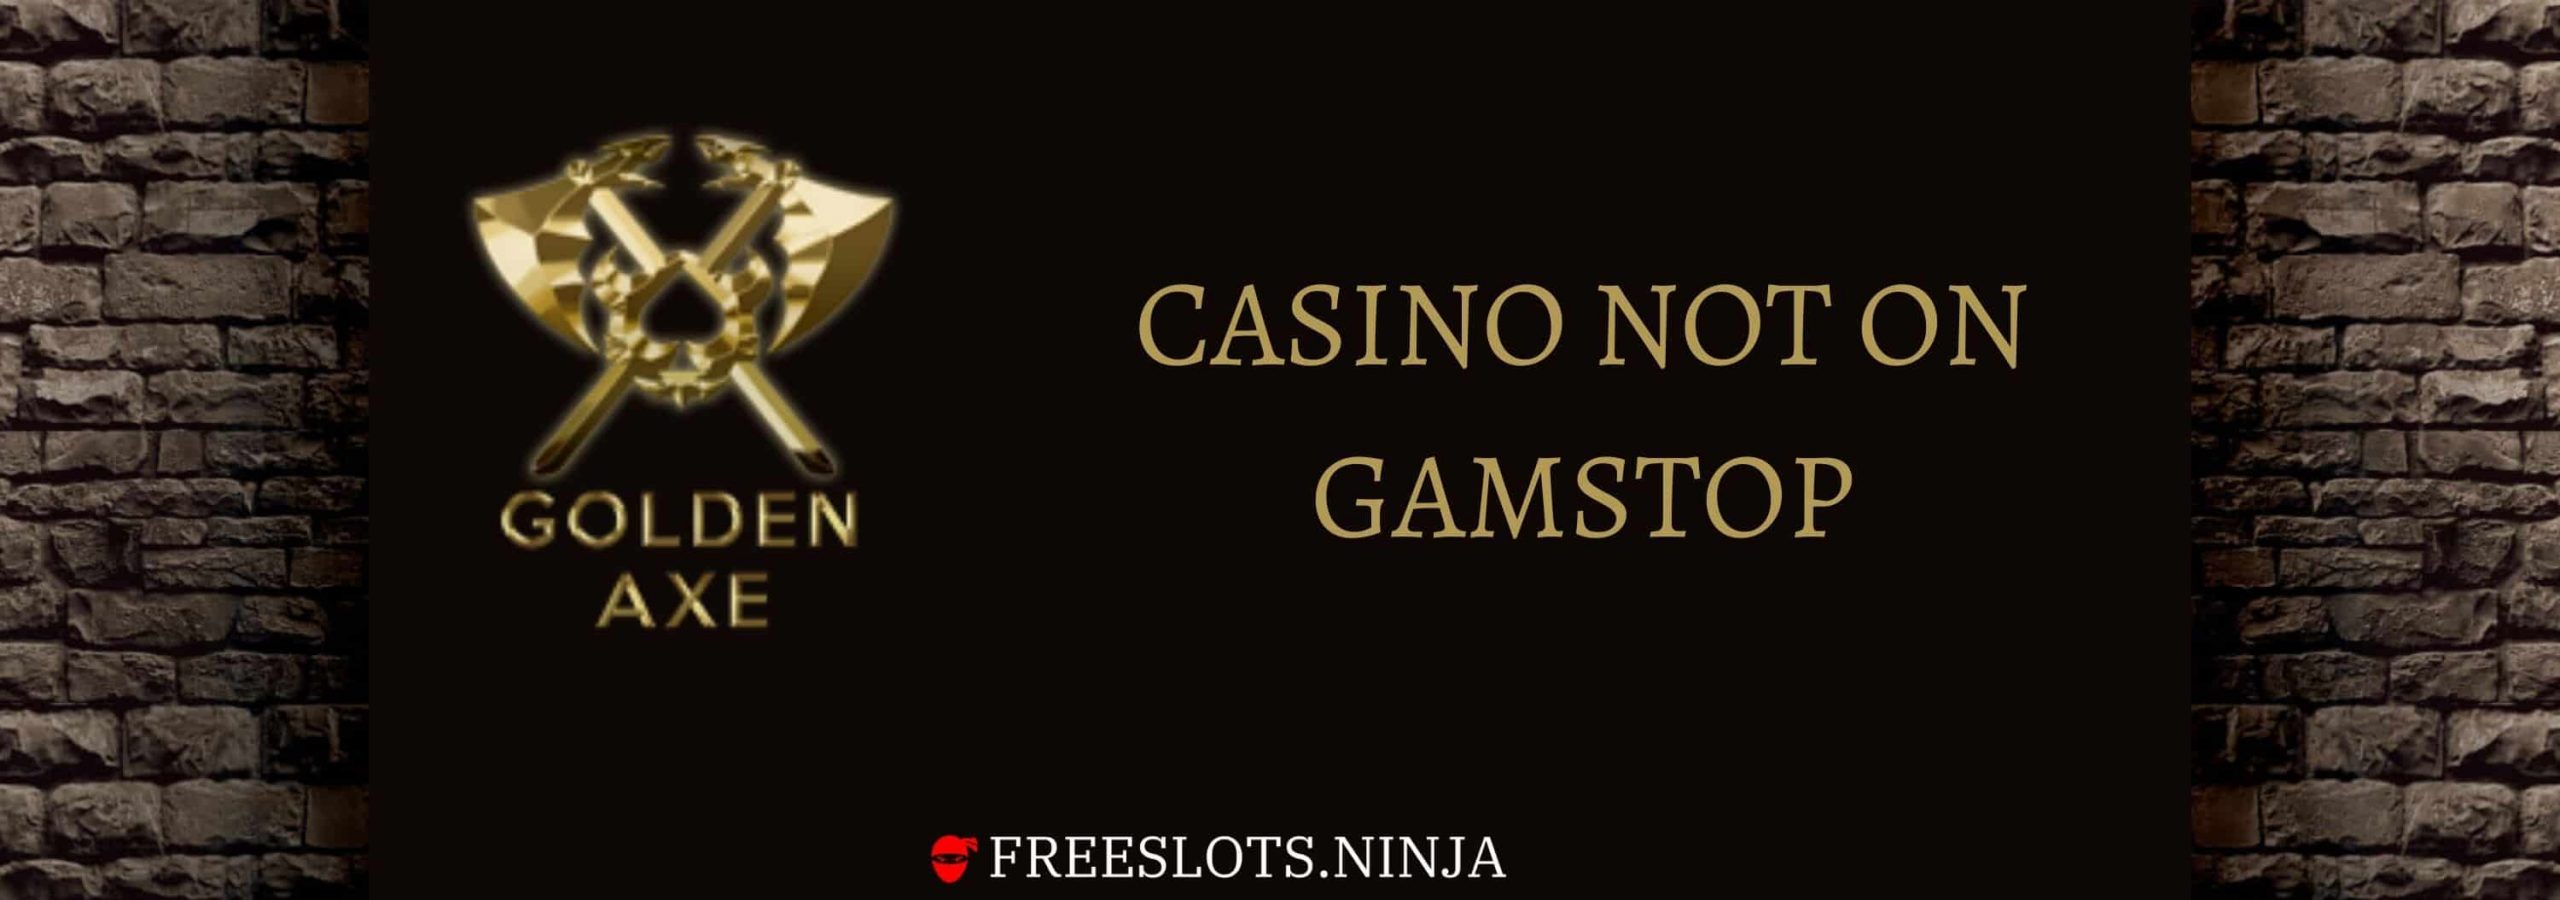 golden axe casino not registered with gamstop